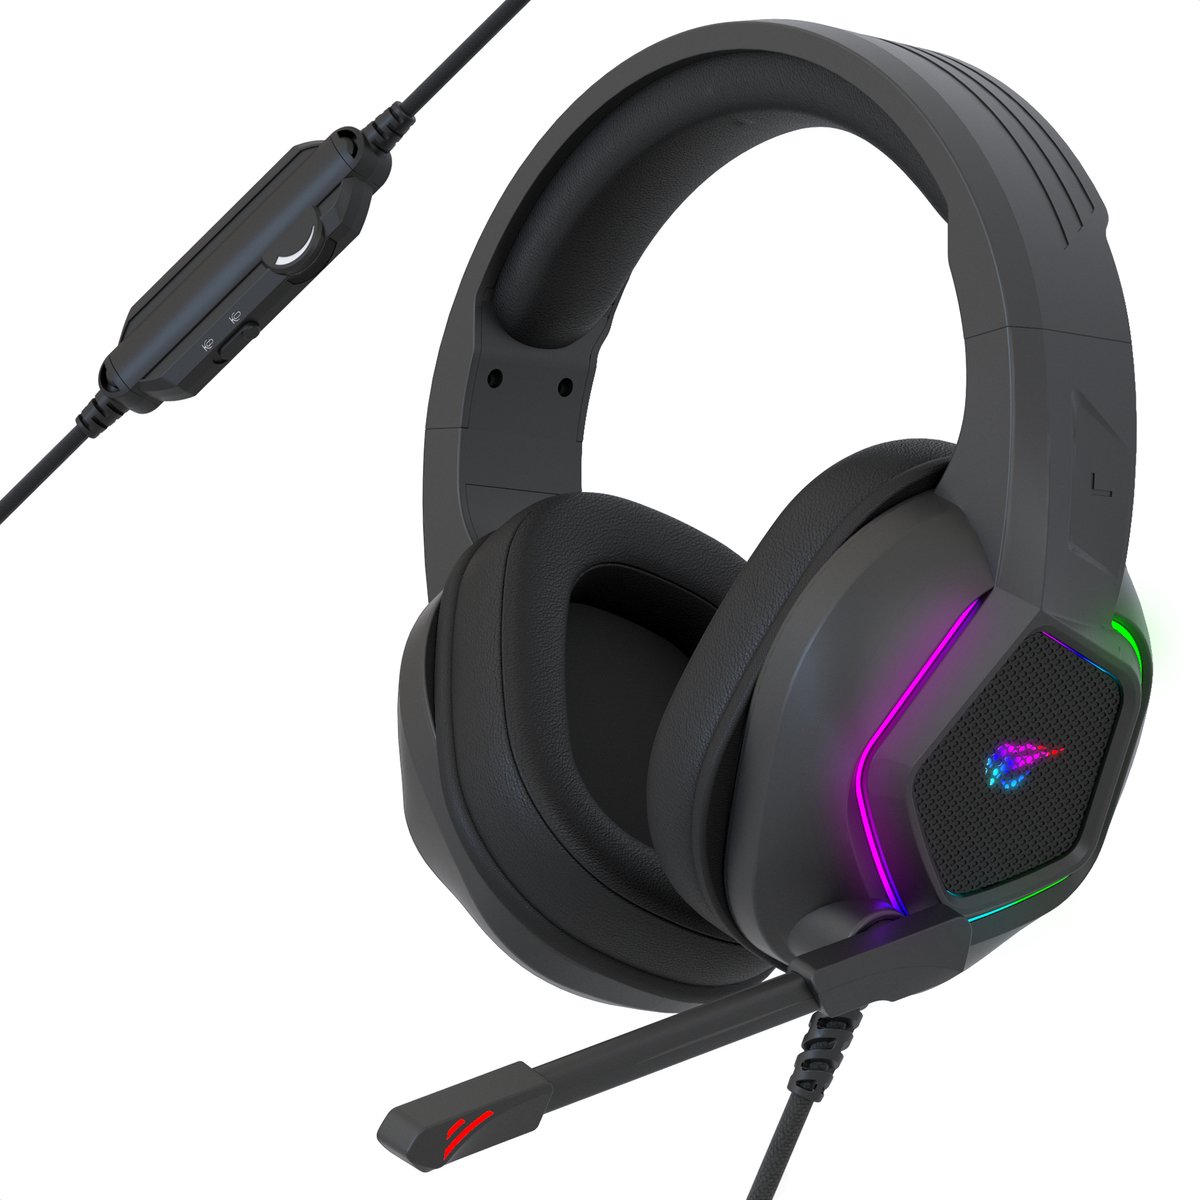 Strex Gaming Headset met Microfoon & RGB Verlichting - 7.1 Surround Sound - PC / PS4 / PS5 / XBOX / Switch - Strex